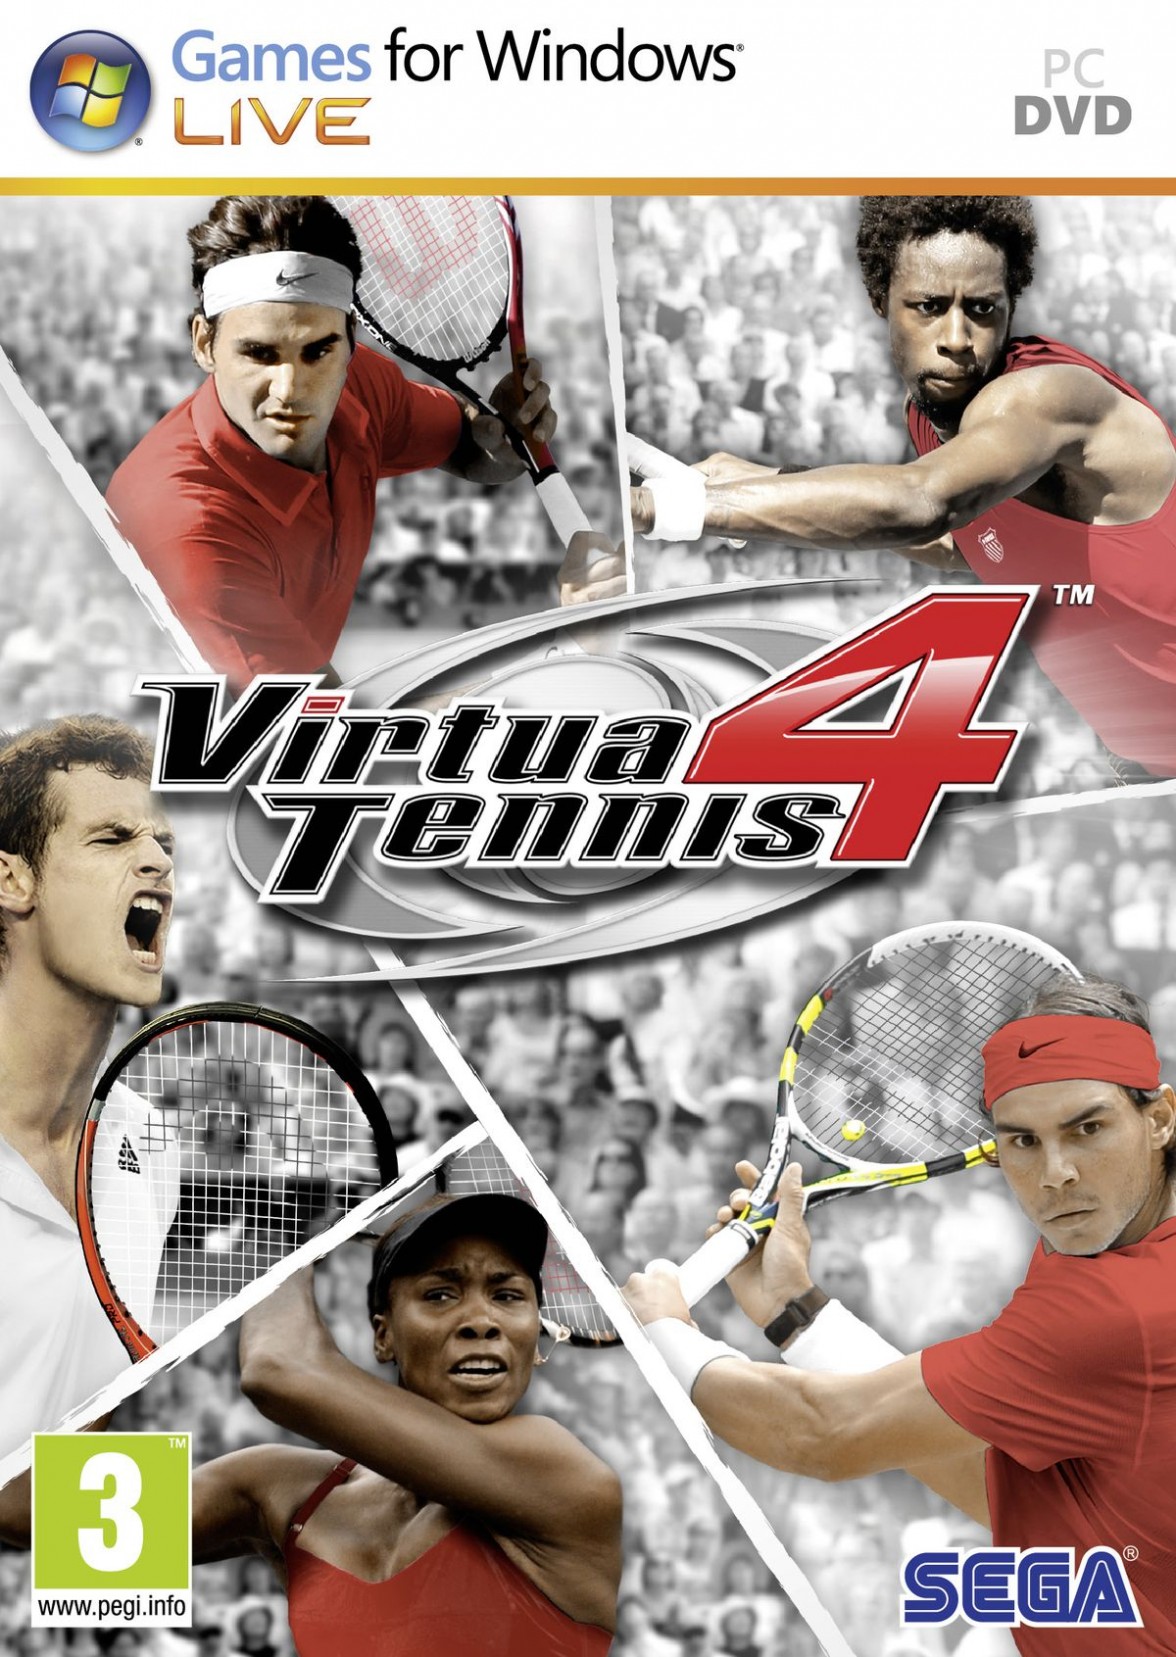 Virtua Tennis 4 free download